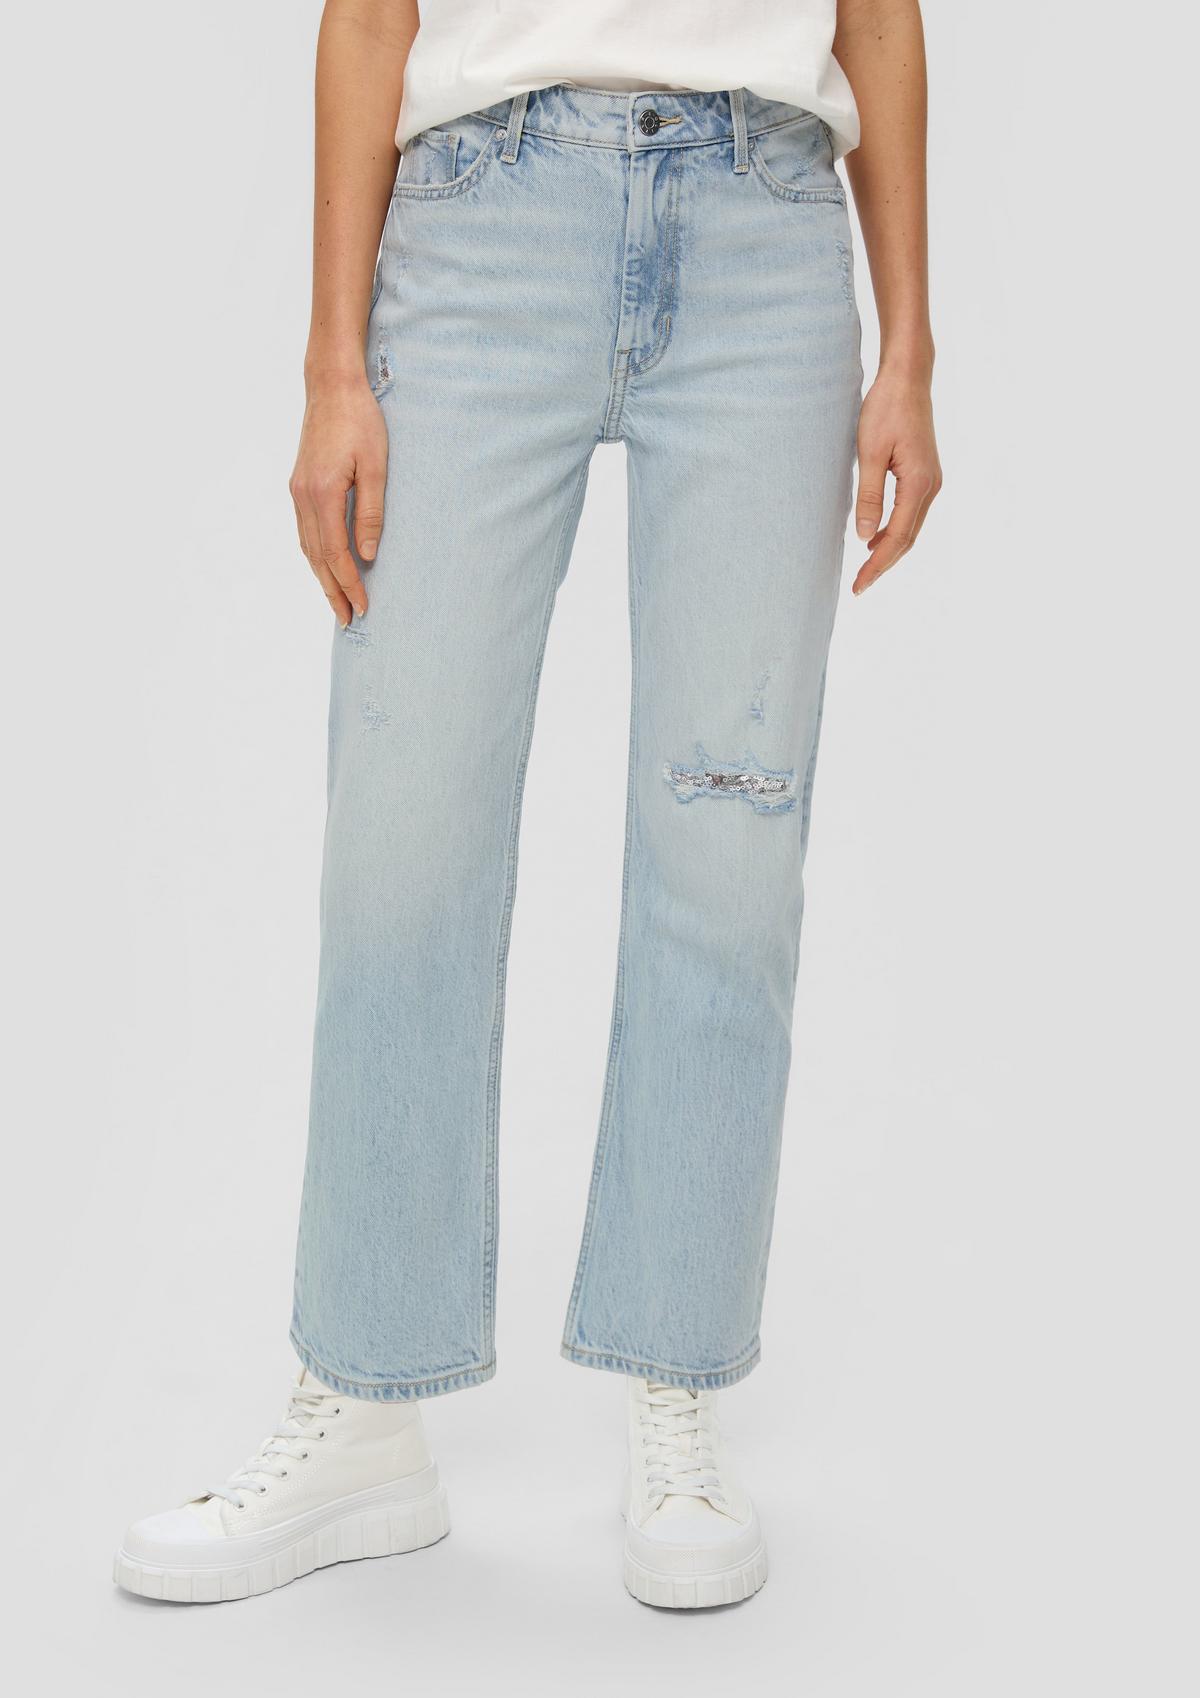 s.Oliver Karolin cropped jeans / regular fit / high rise / straight leg / sequin detail